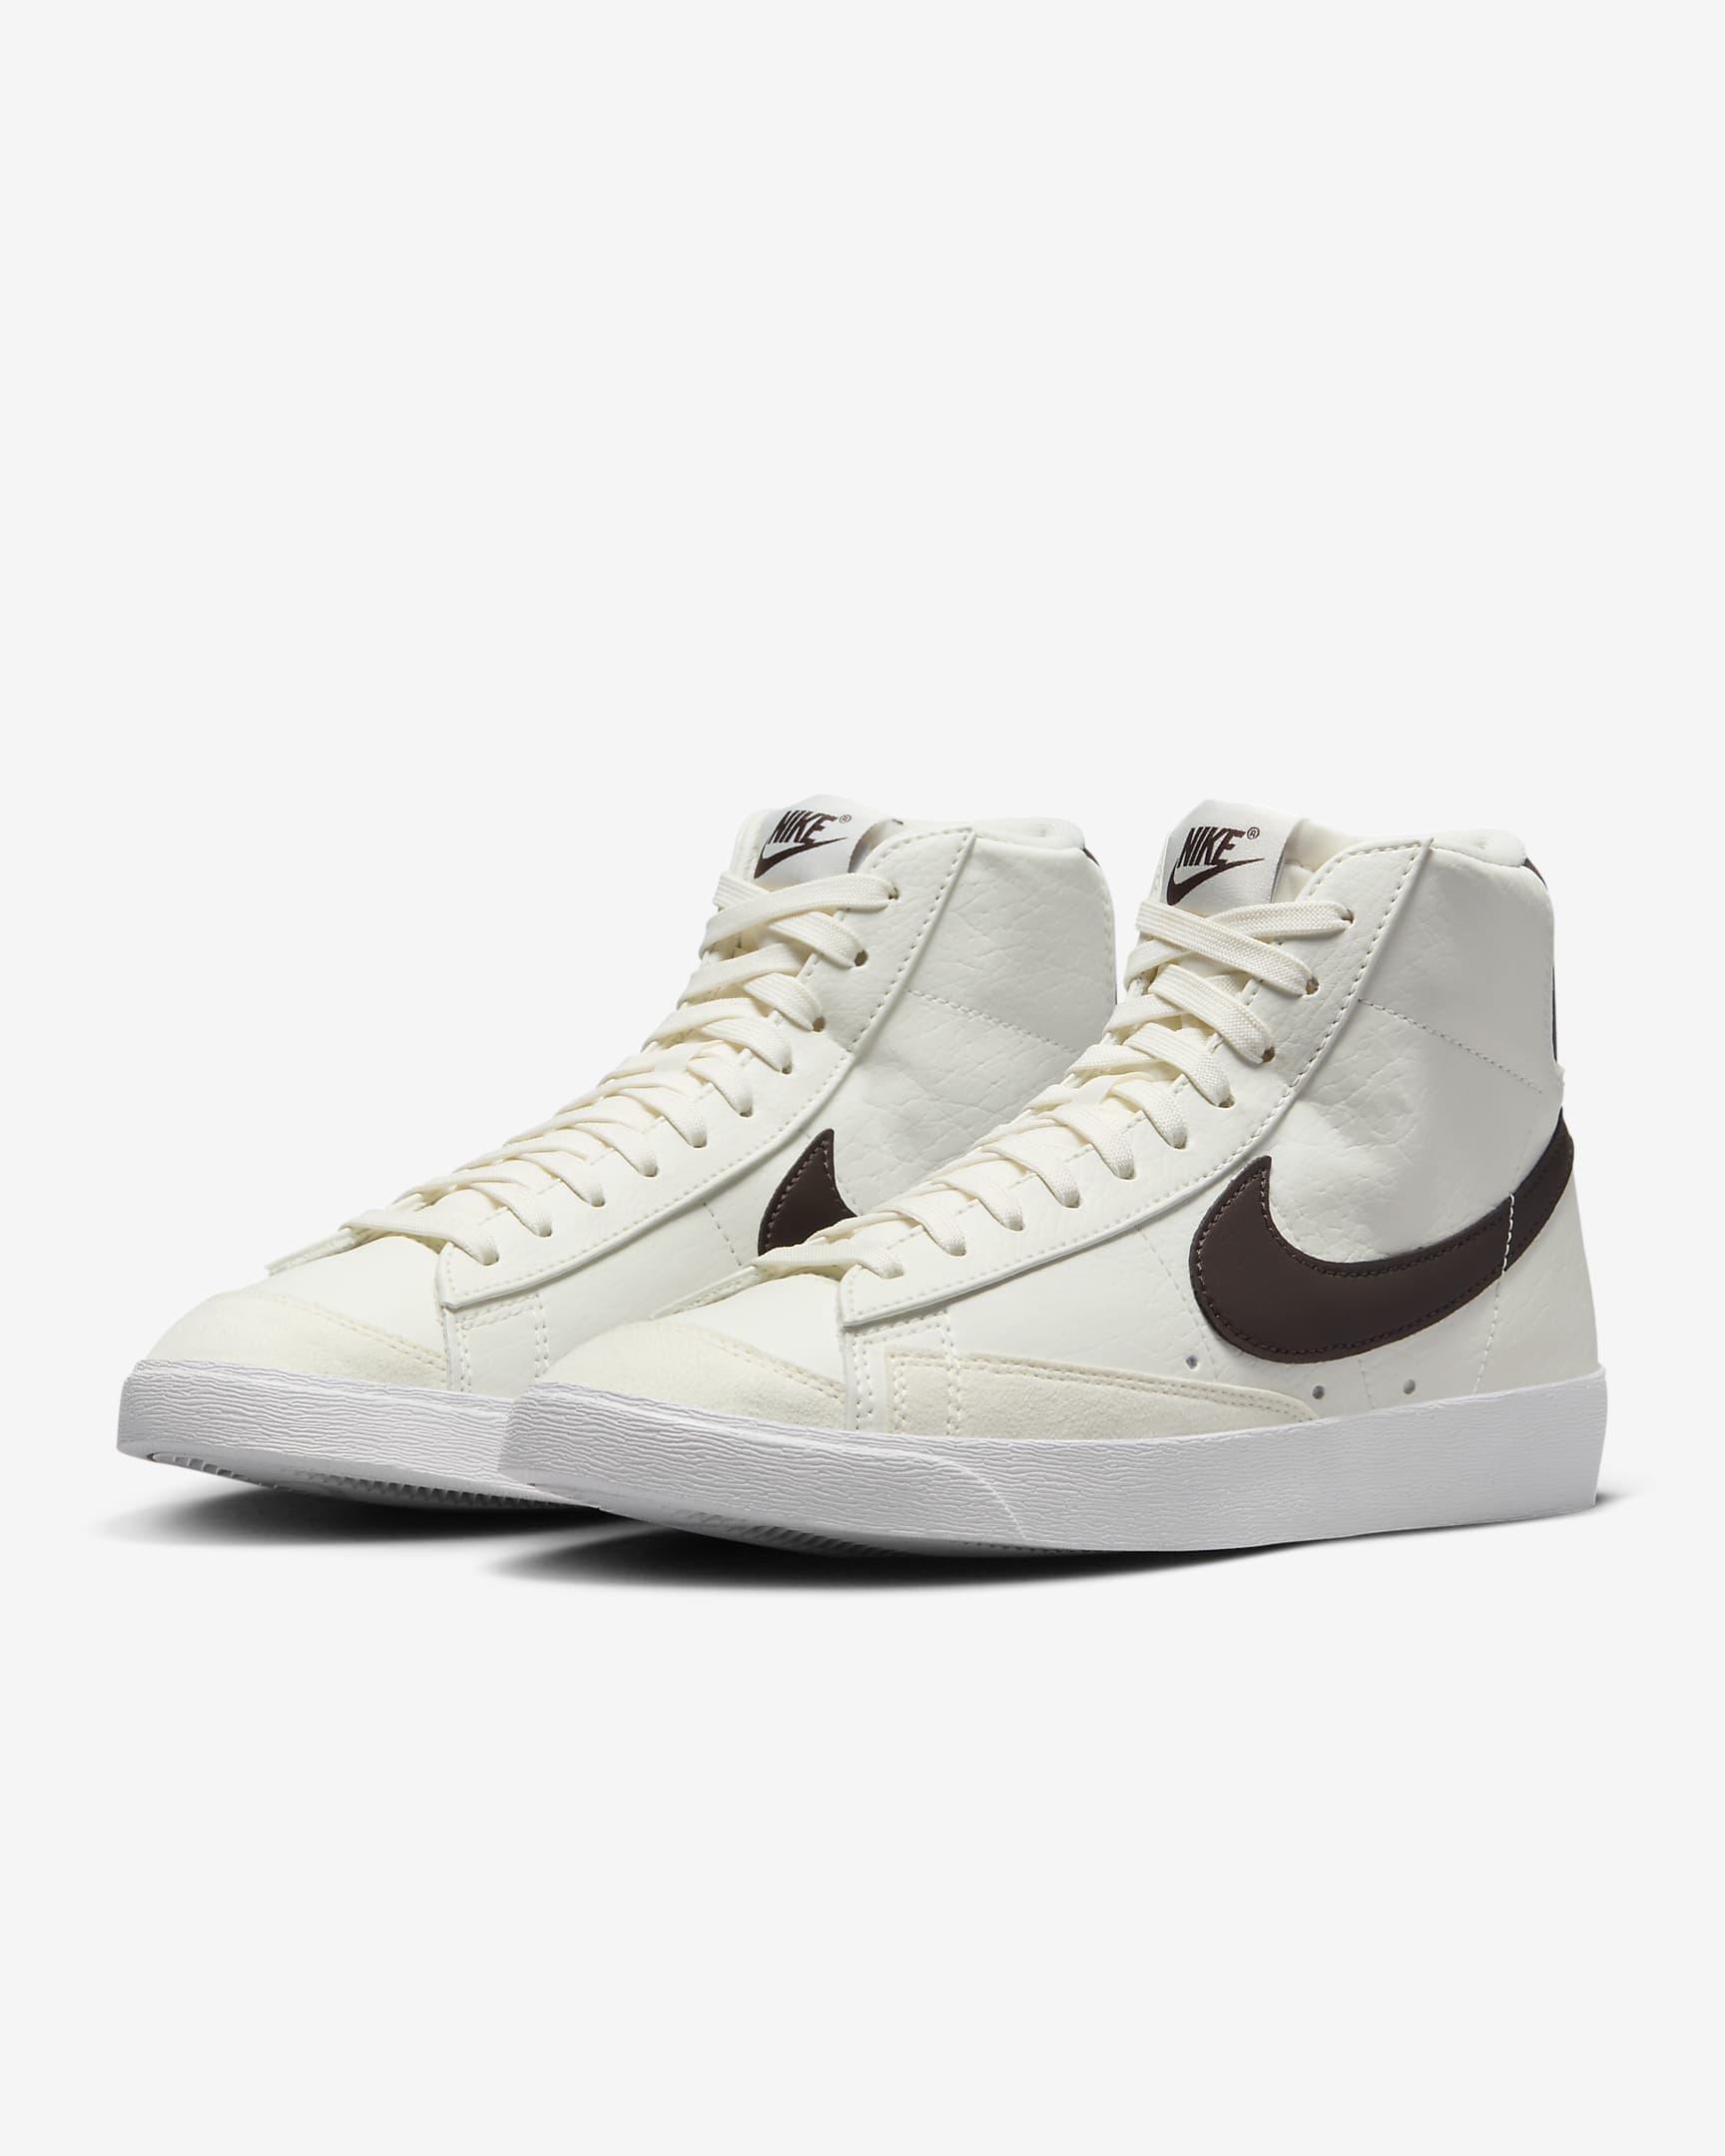 Nike Blazer Mid '77 Women's Shoes - Sail/White/Baroque Brown